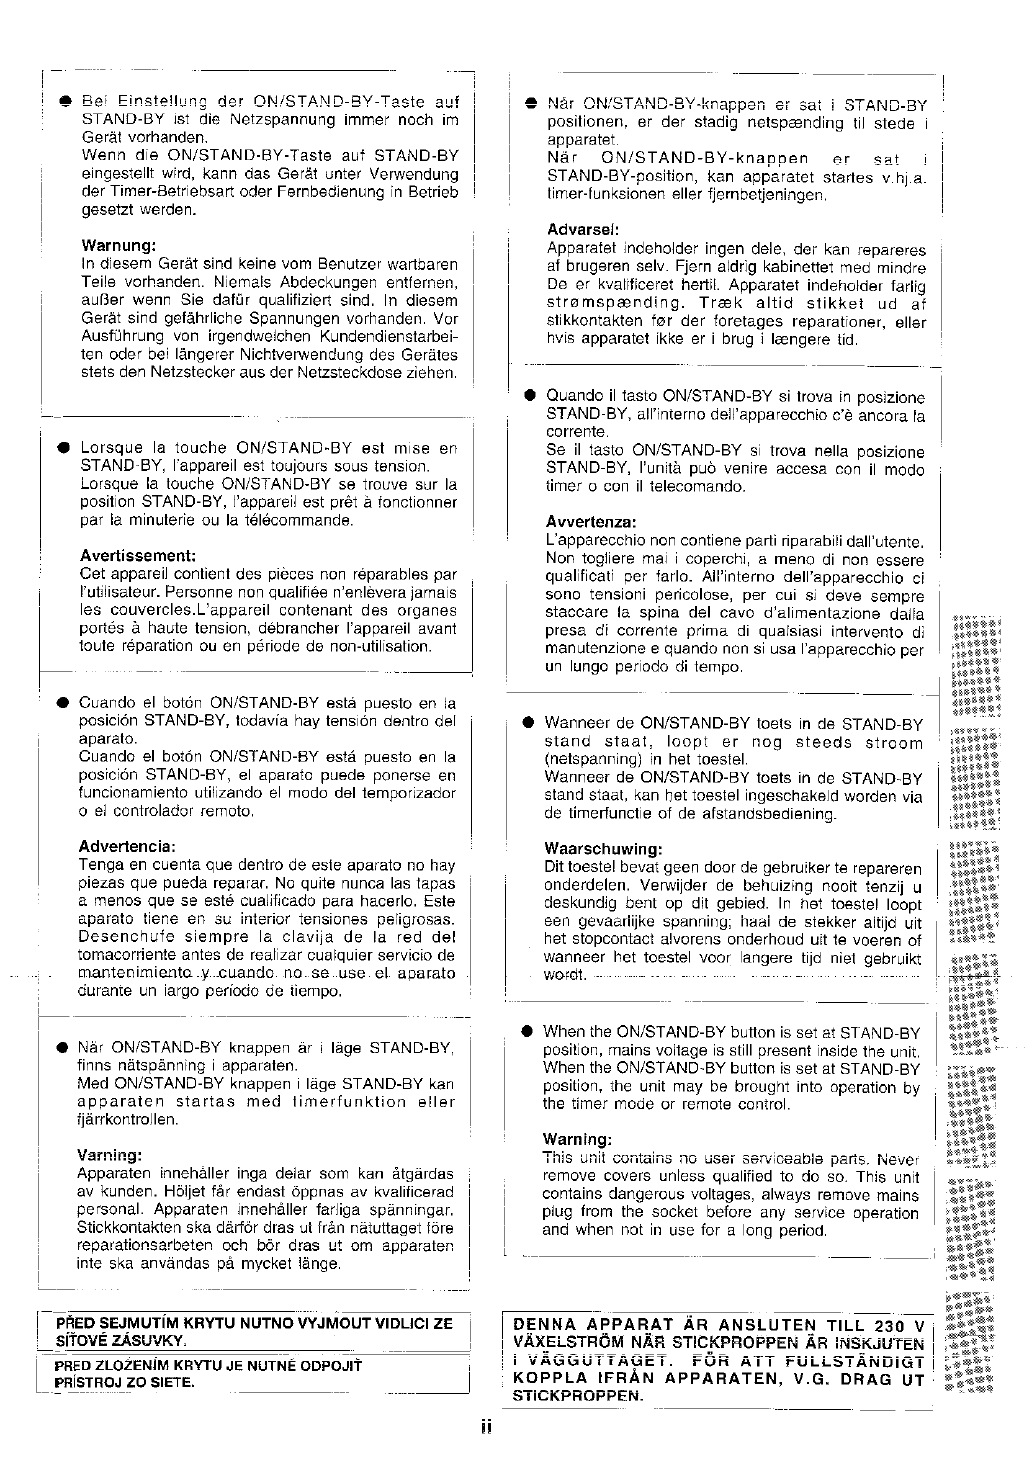 Manual Sharp Cd C 661 H Page 1 Of 38 Dutch